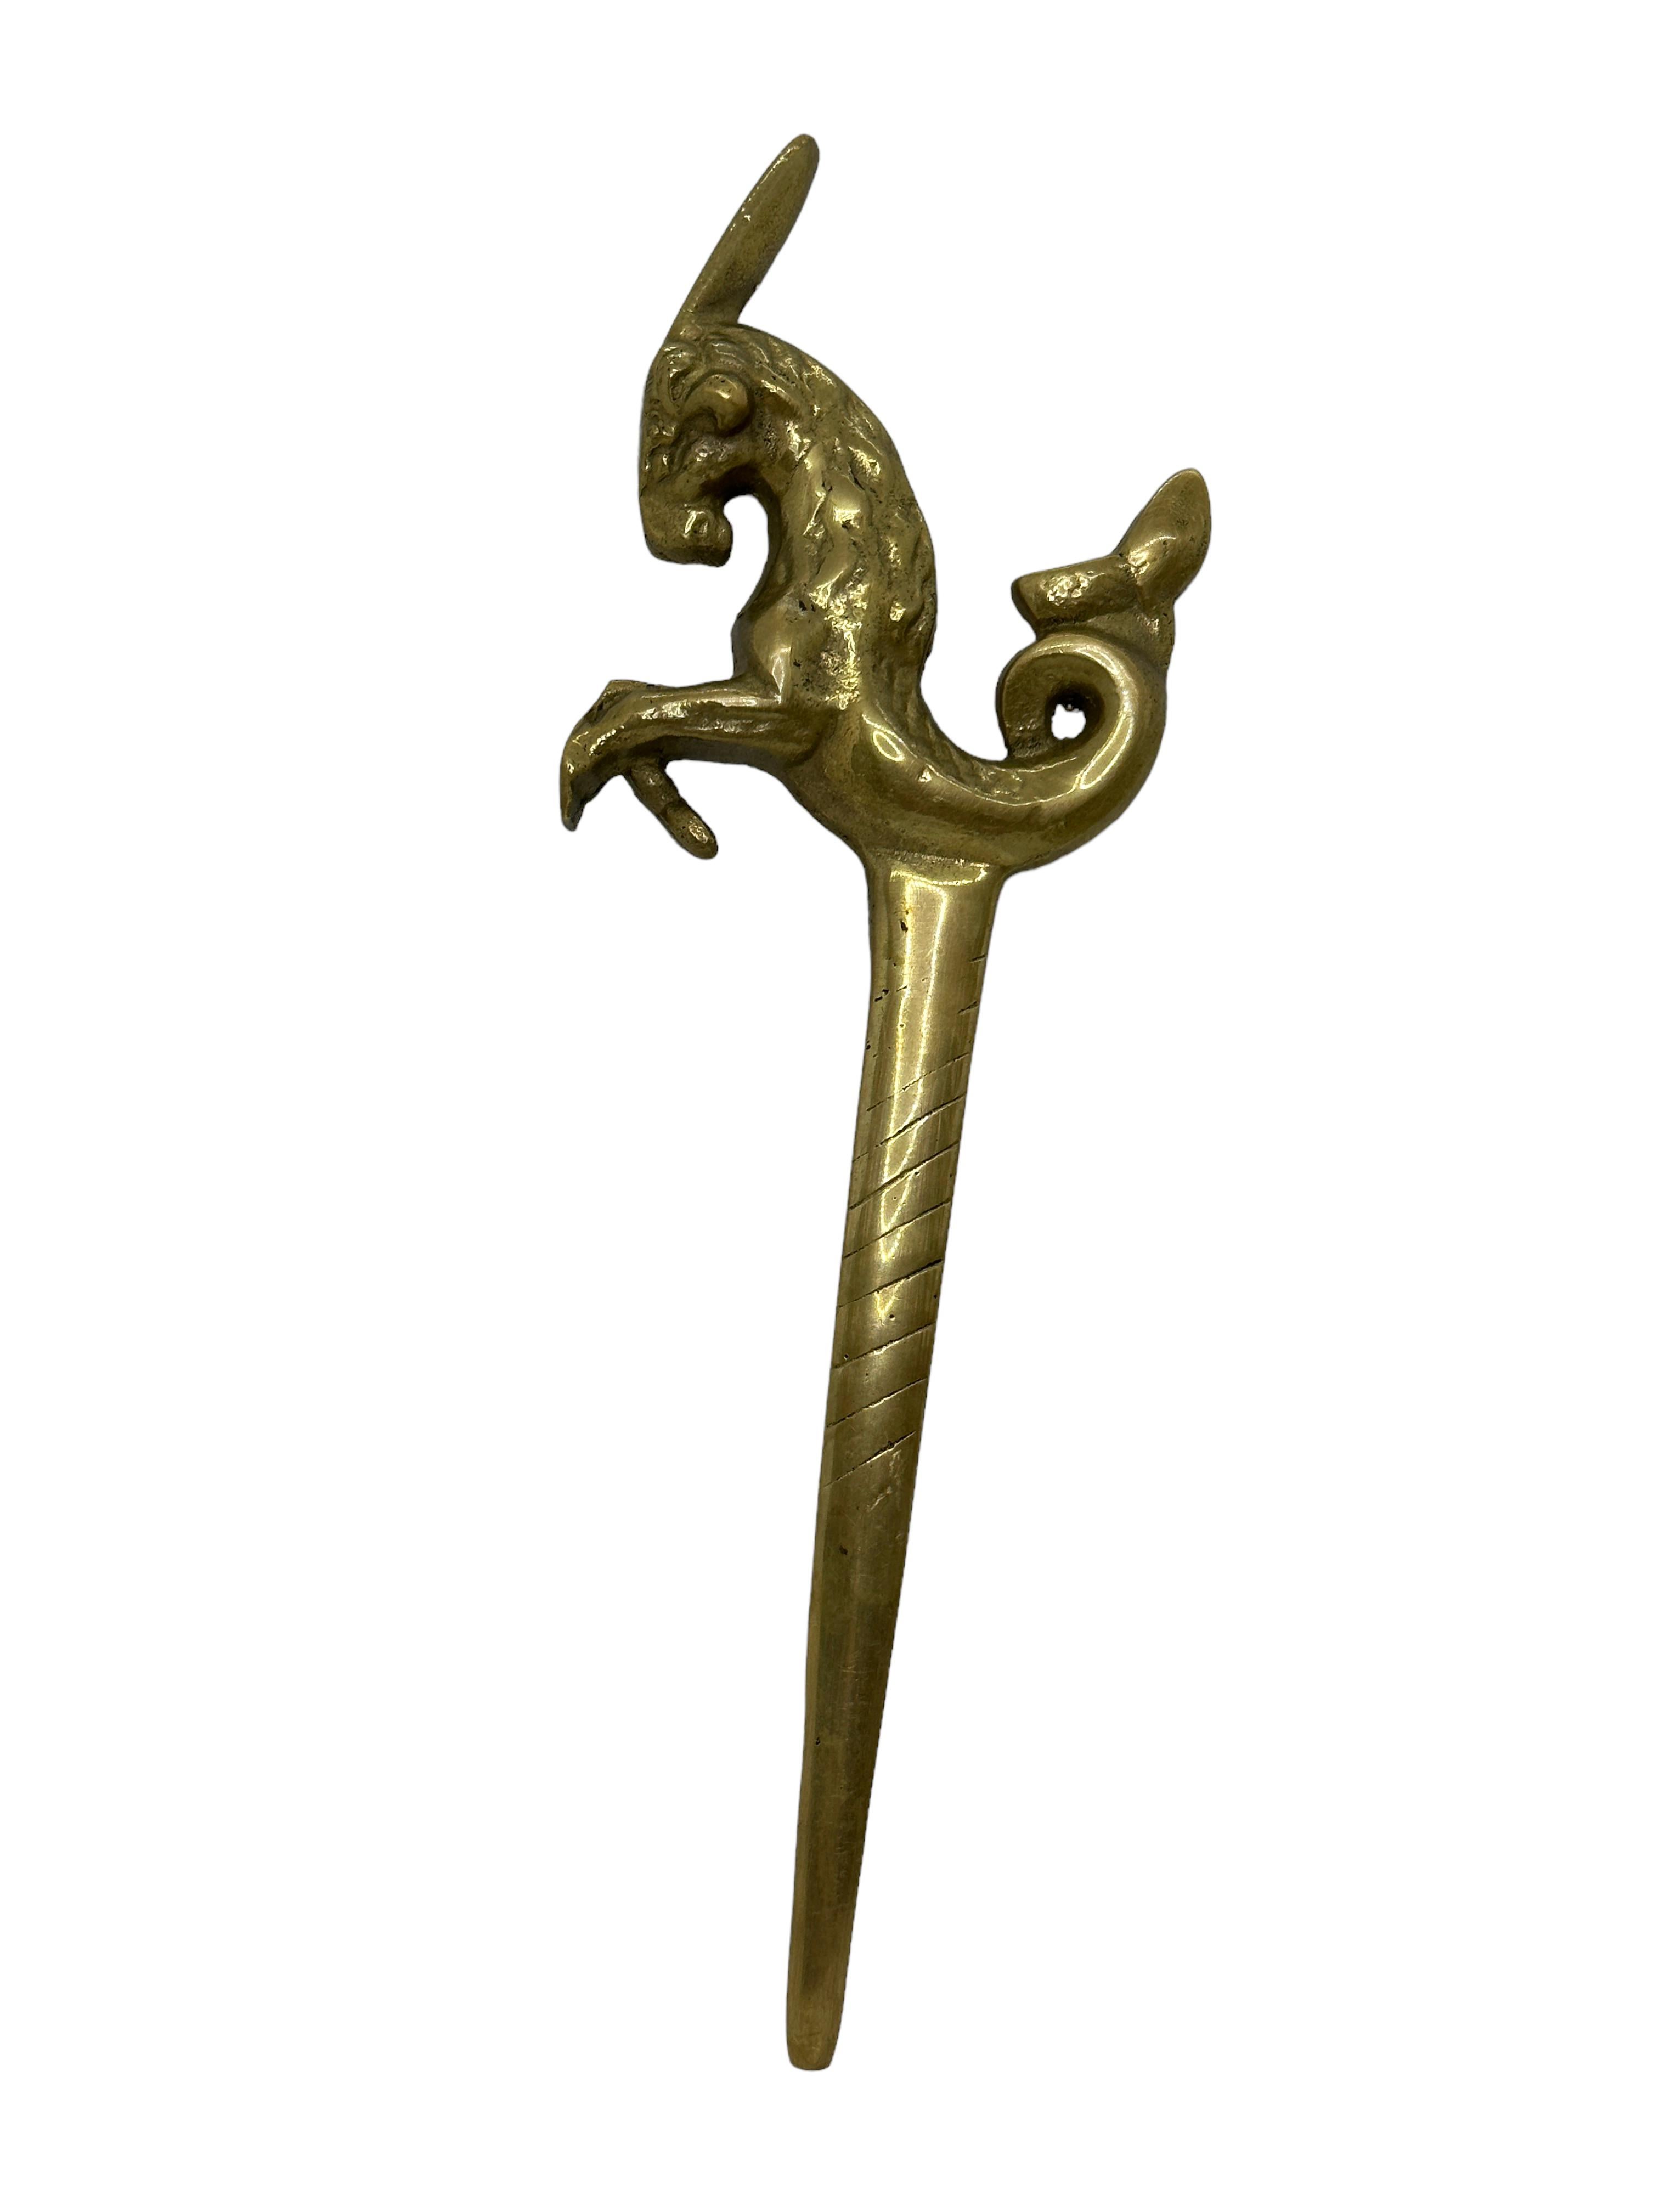 Unicorn Mythical Creature Vienna Bronze Letter Opener, Antique Austria 1960s In Good Condition For Sale In Nuernberg, DE